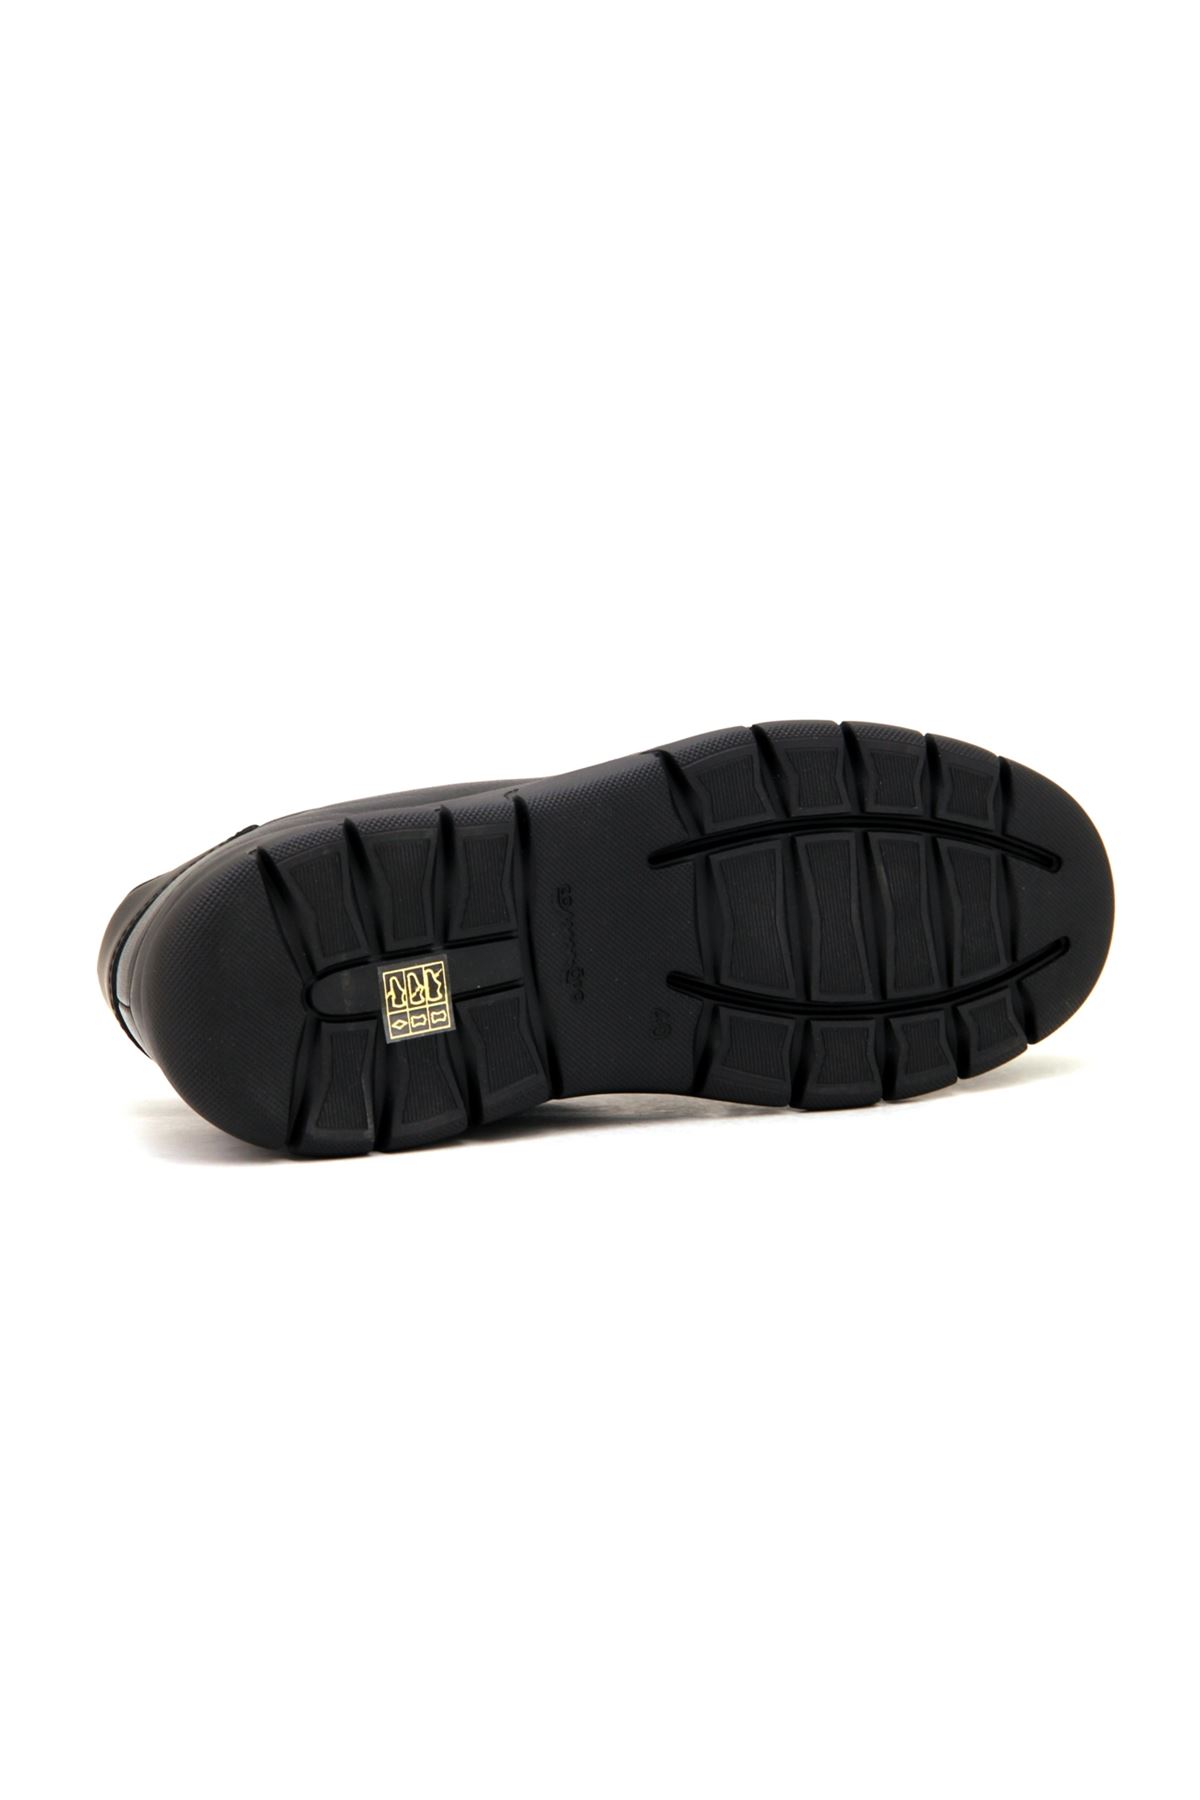 Libero 4502 Hakiki Deri Comfort Erkek Ayakkabı - Siyah